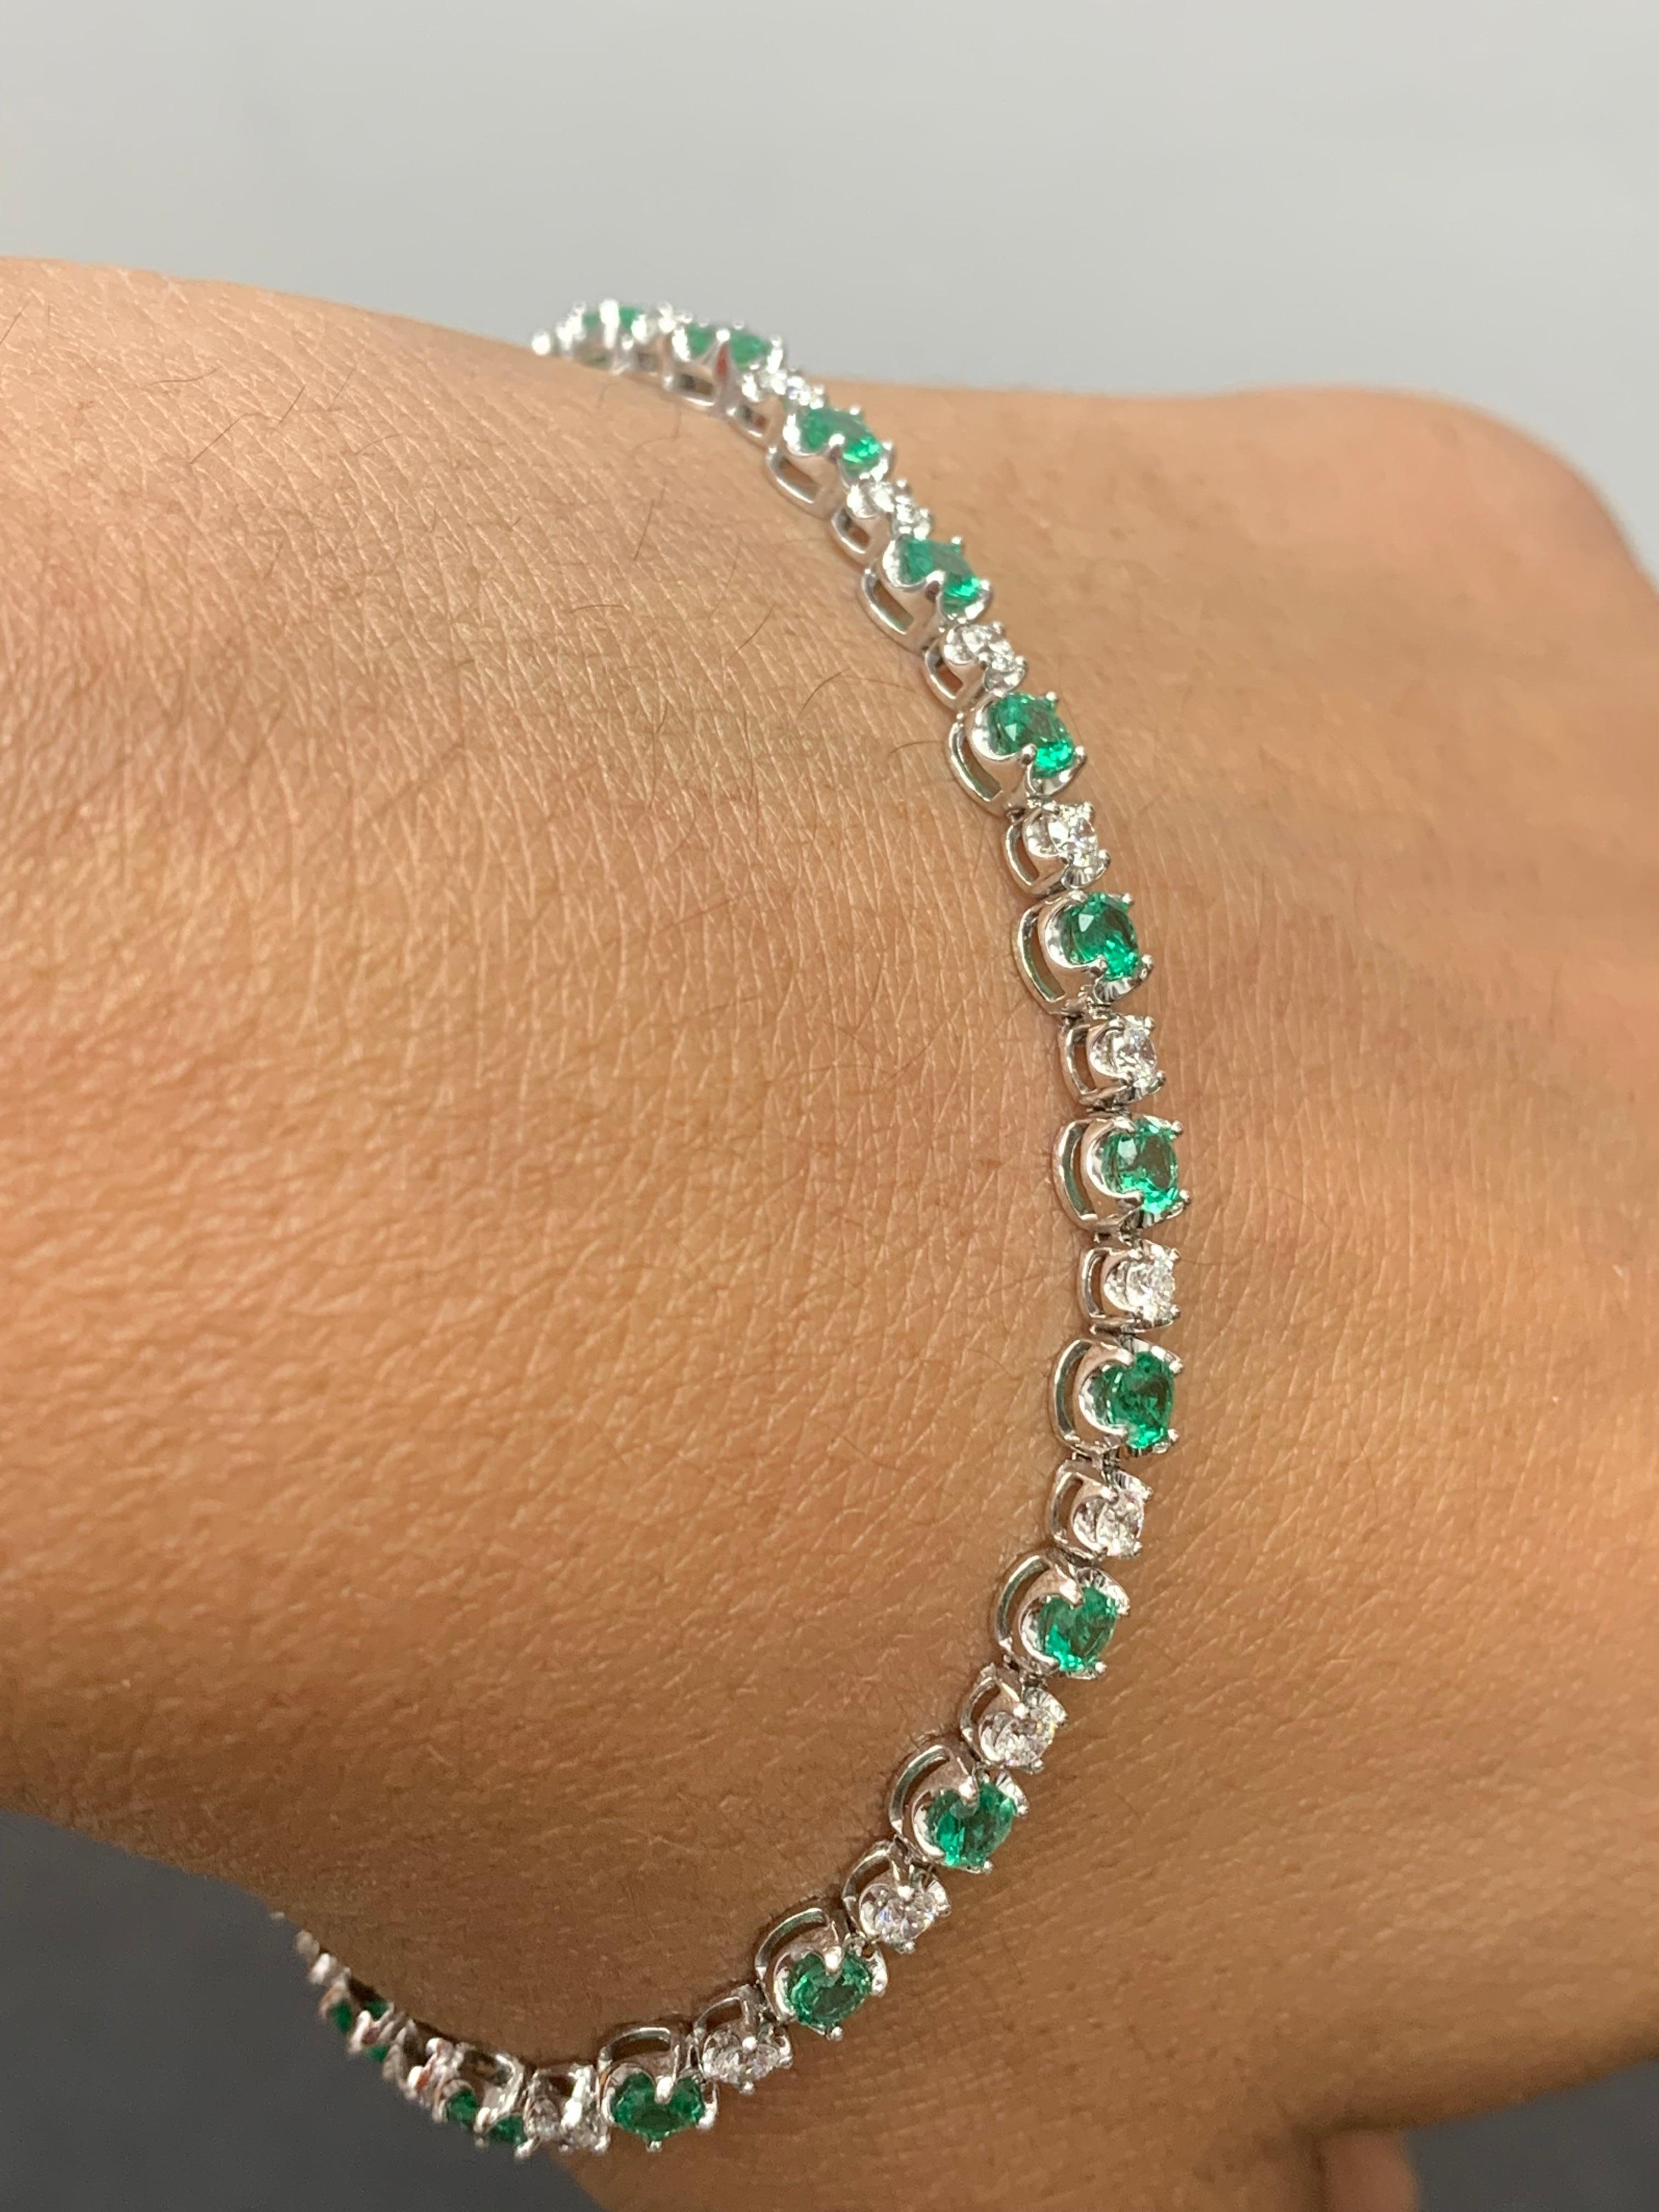 Women's 3.42 Carat Brilliant Cut Emerald and Diamond Bracelet in 14k White Gold For Sale